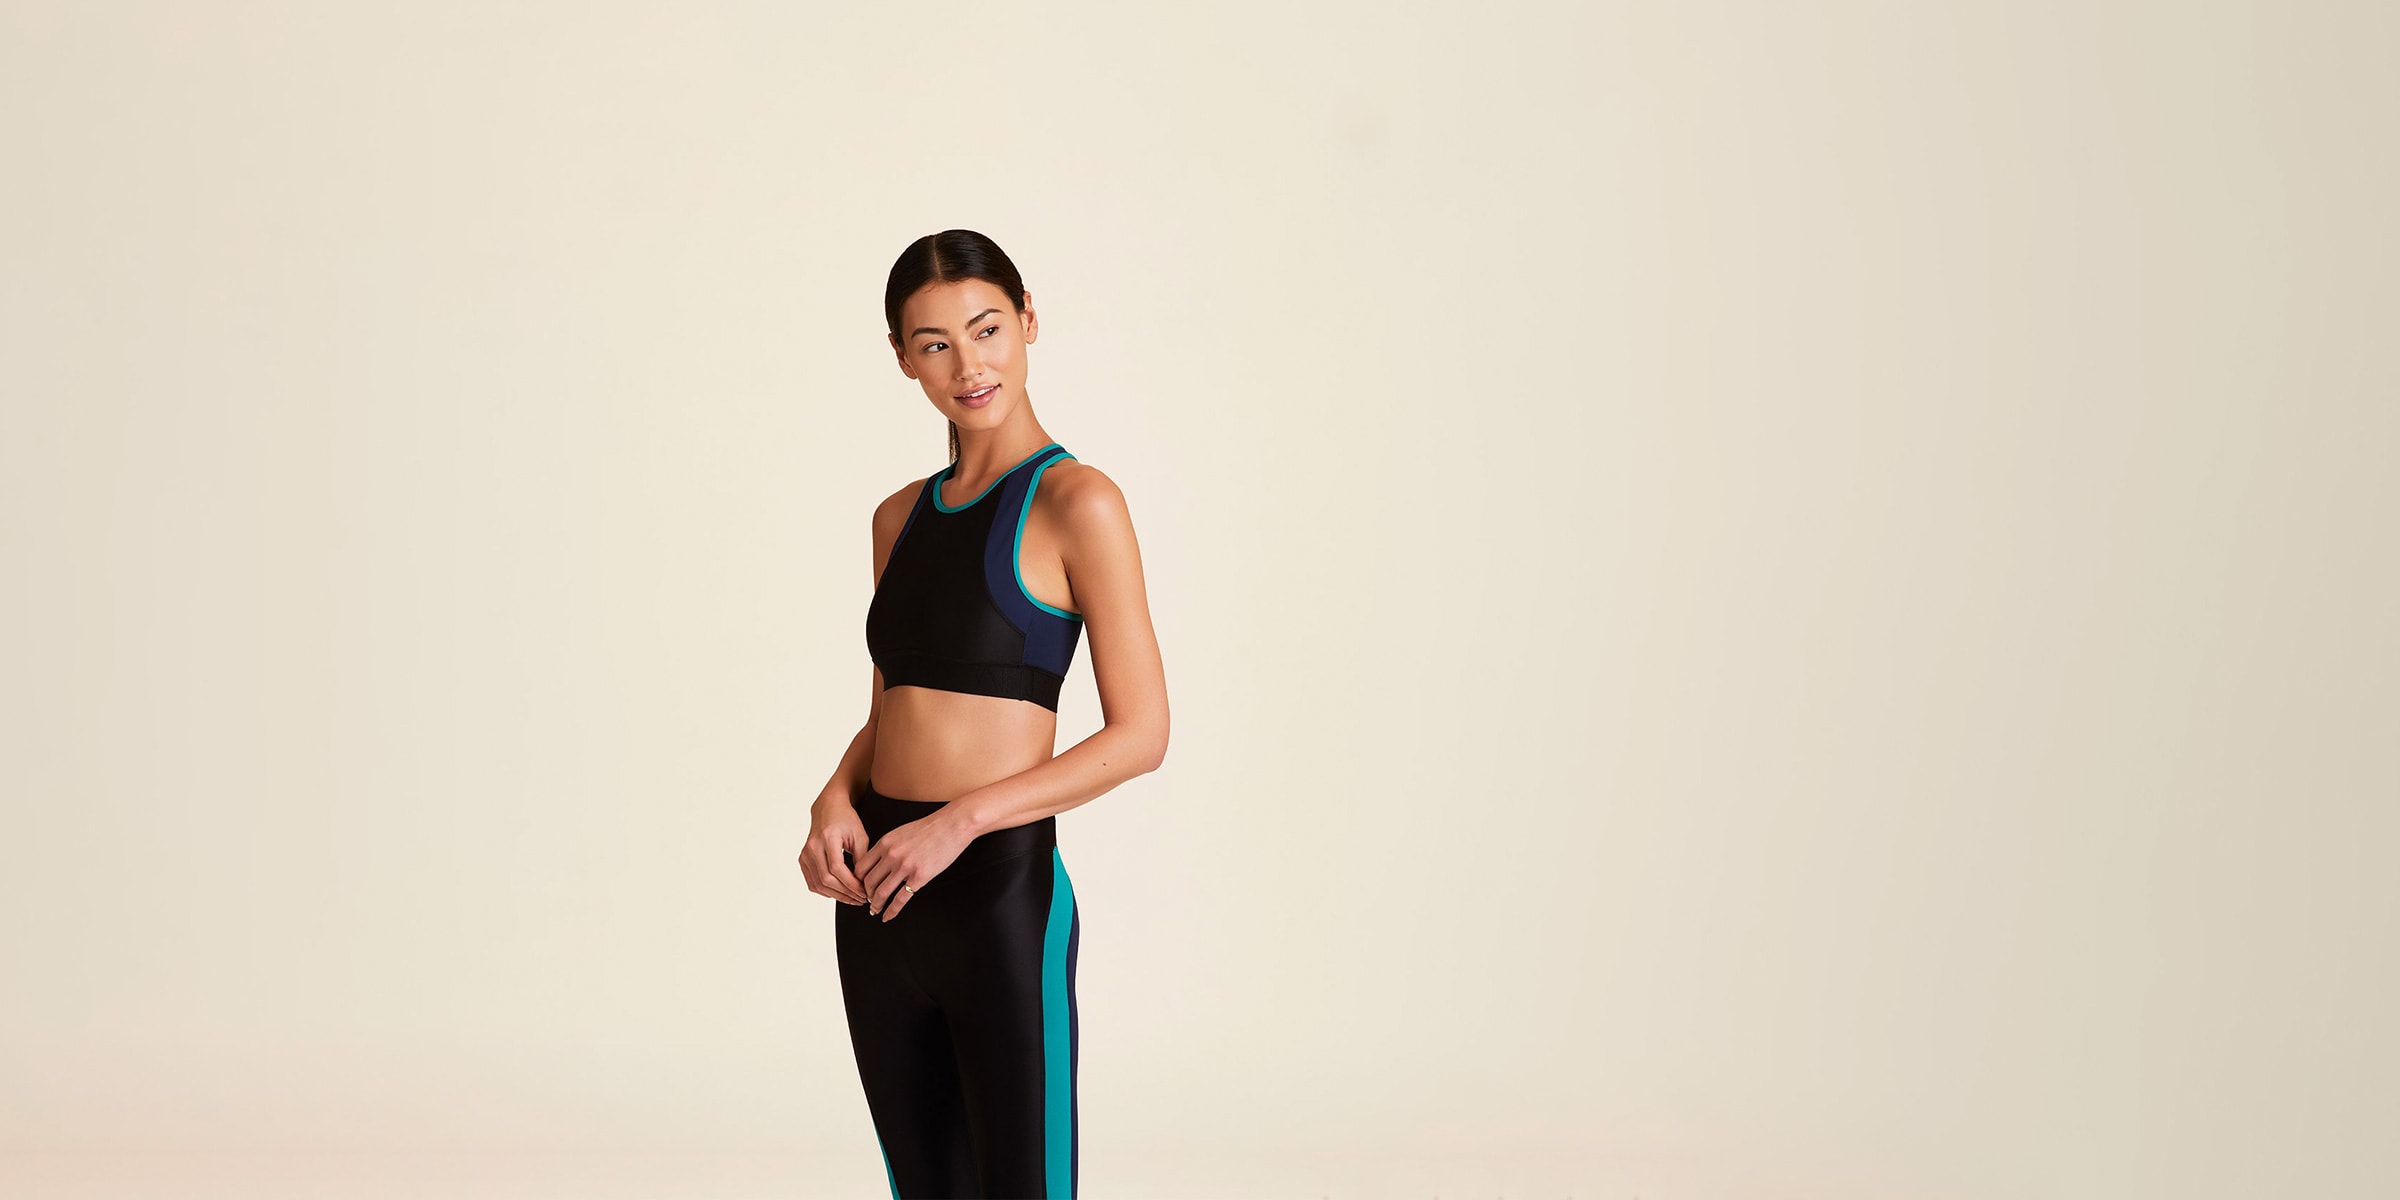 AusFeLin Sports Bras for Women Padded 3 Pack Seamless Medium Impact Support High Neck for Yoga Running Dancing Gym